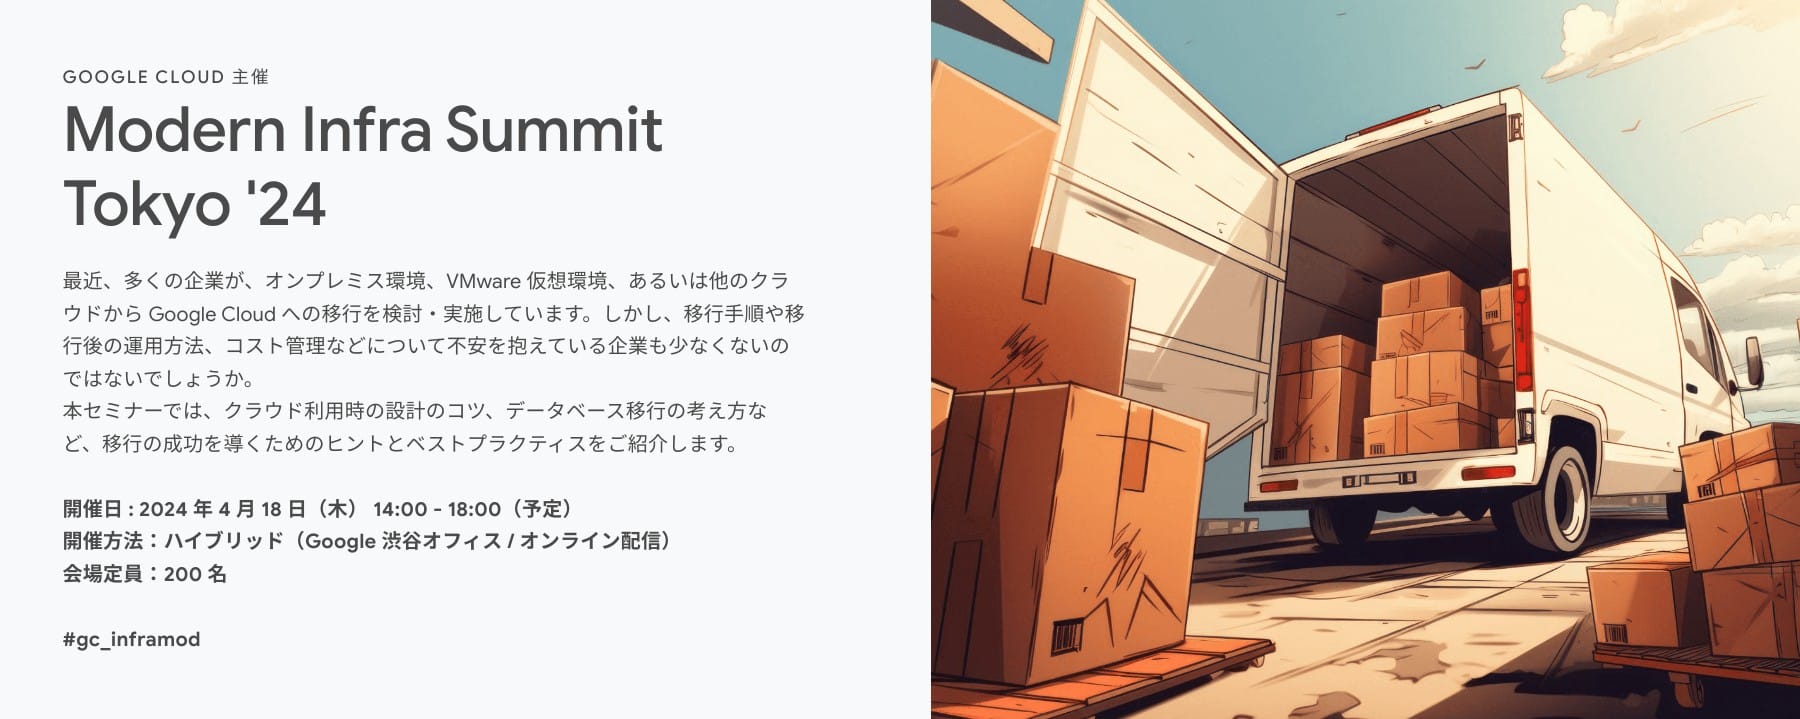 [Google Cloud] Modern Infra Summit Tokyo '24